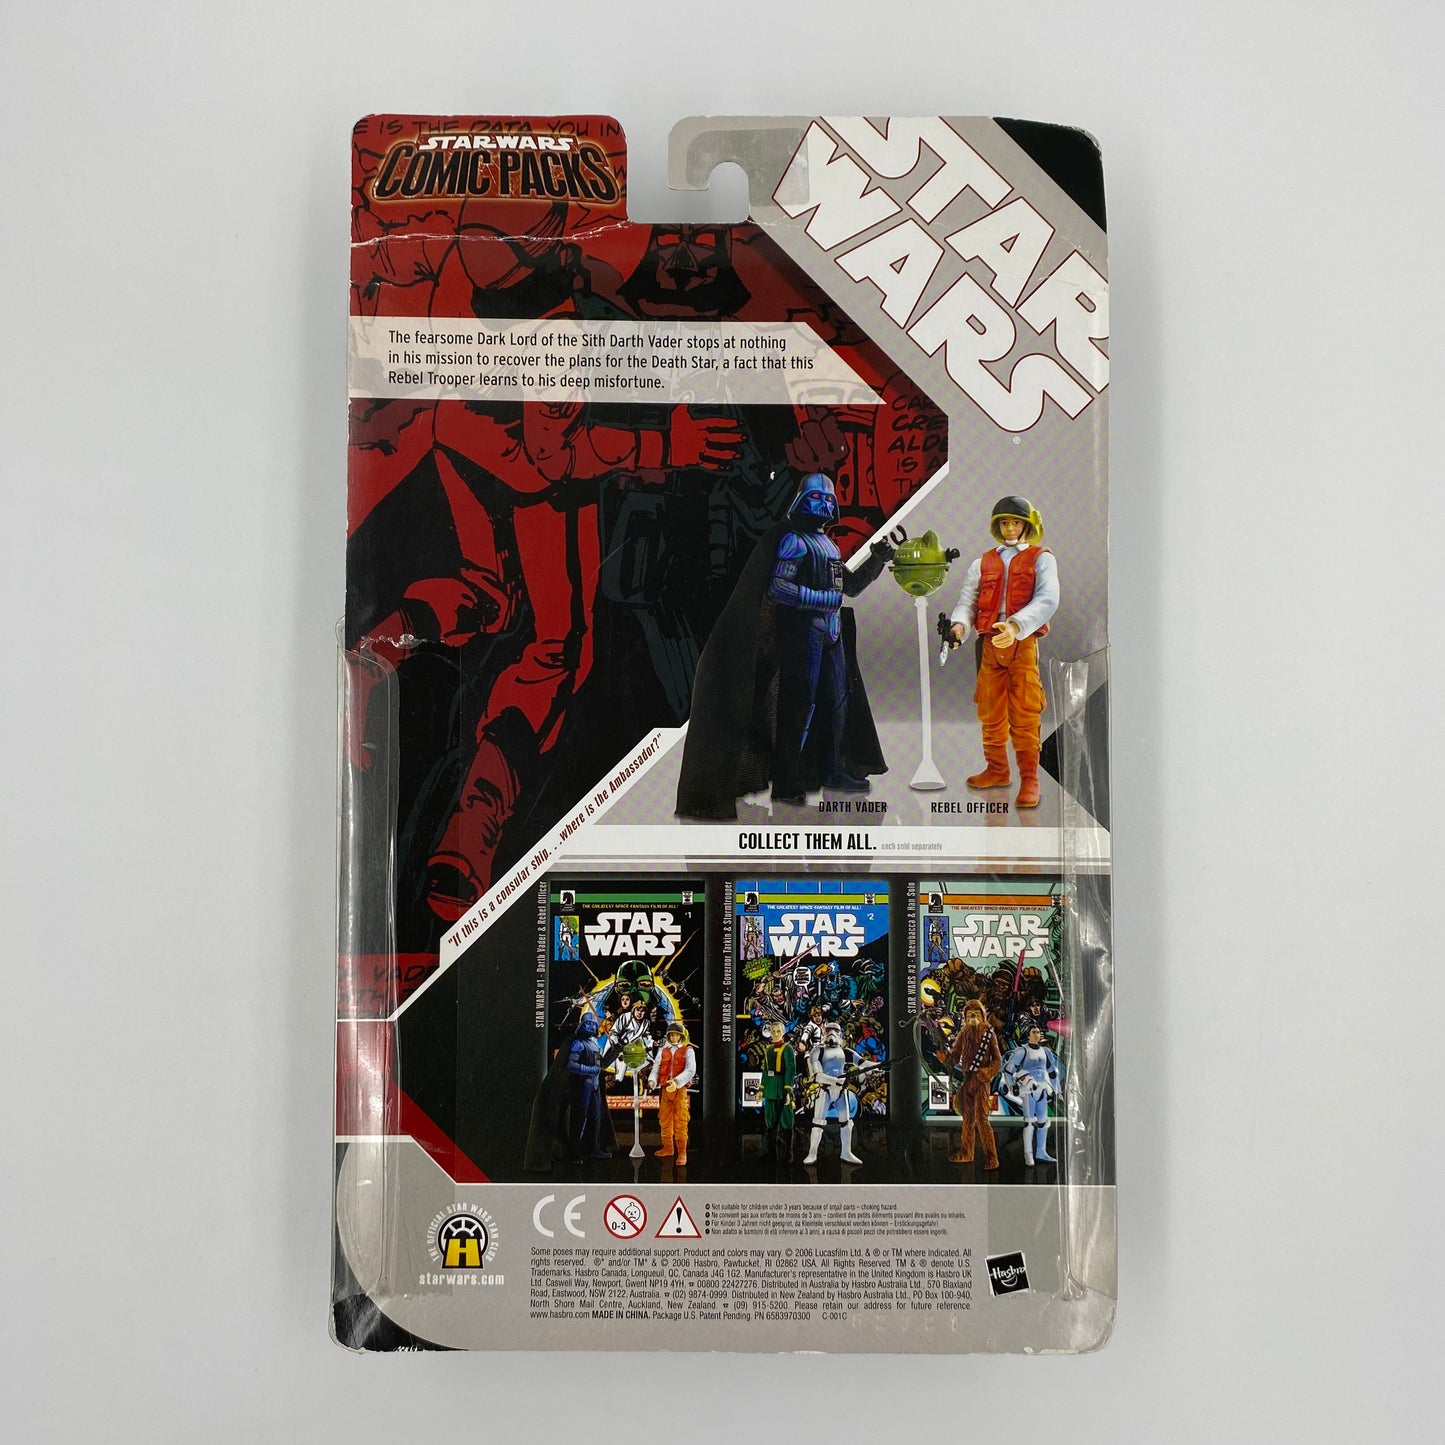 Star Wars Comic Packs #2 Darth Vader & Rebel Officer carded 3.75” action figures (2006) Hasbro